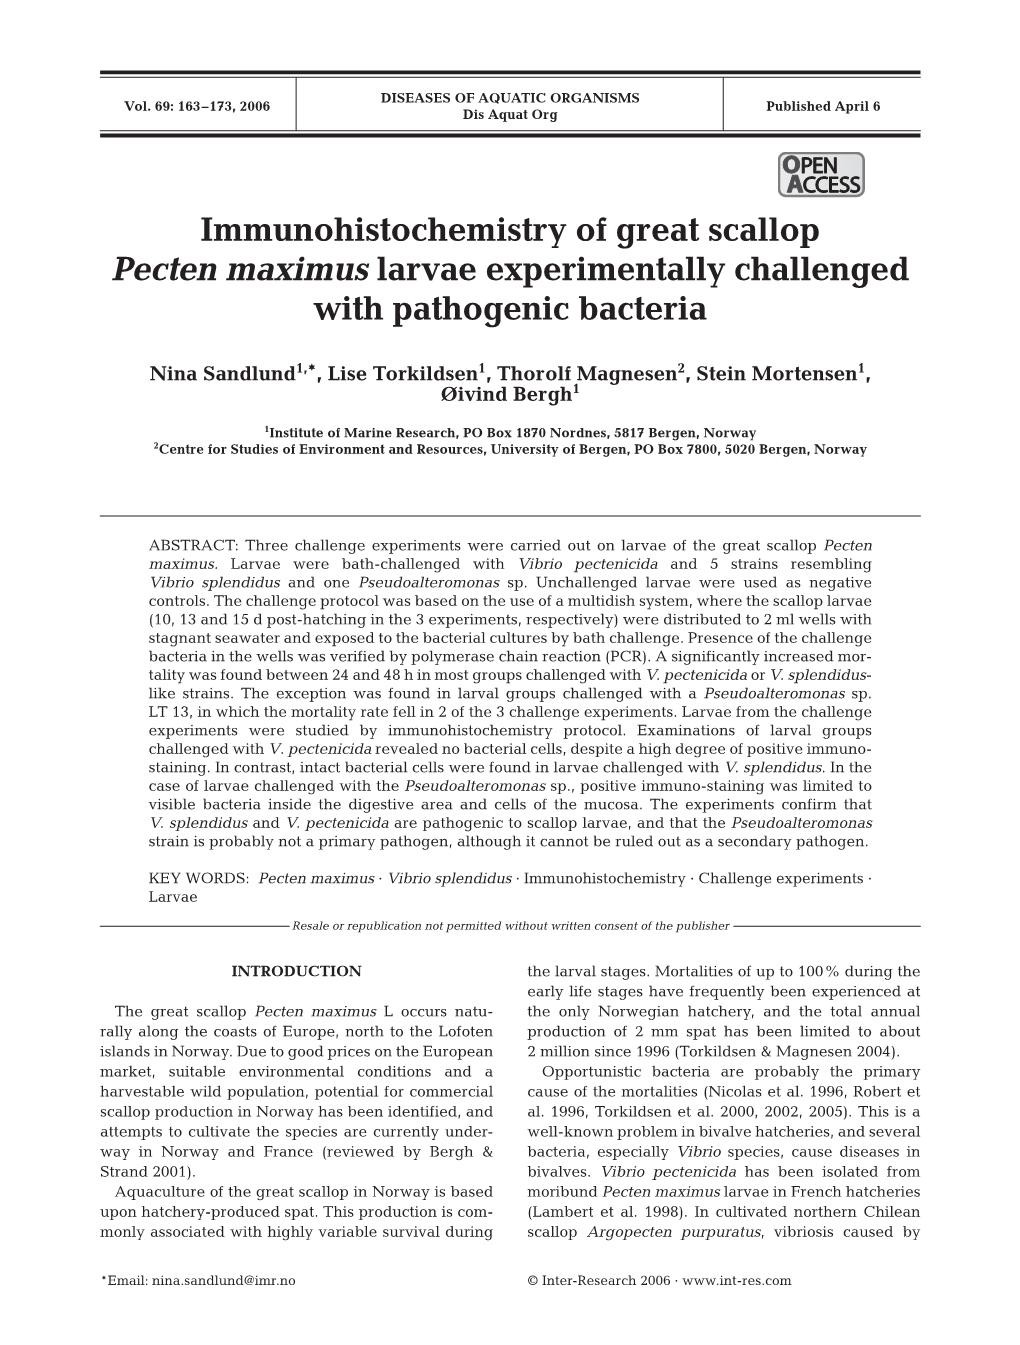 Immunohistochemistry of Great Scallop Pecten Maximus Larvae Experimentally Challenged with Pathogenic Bacteria